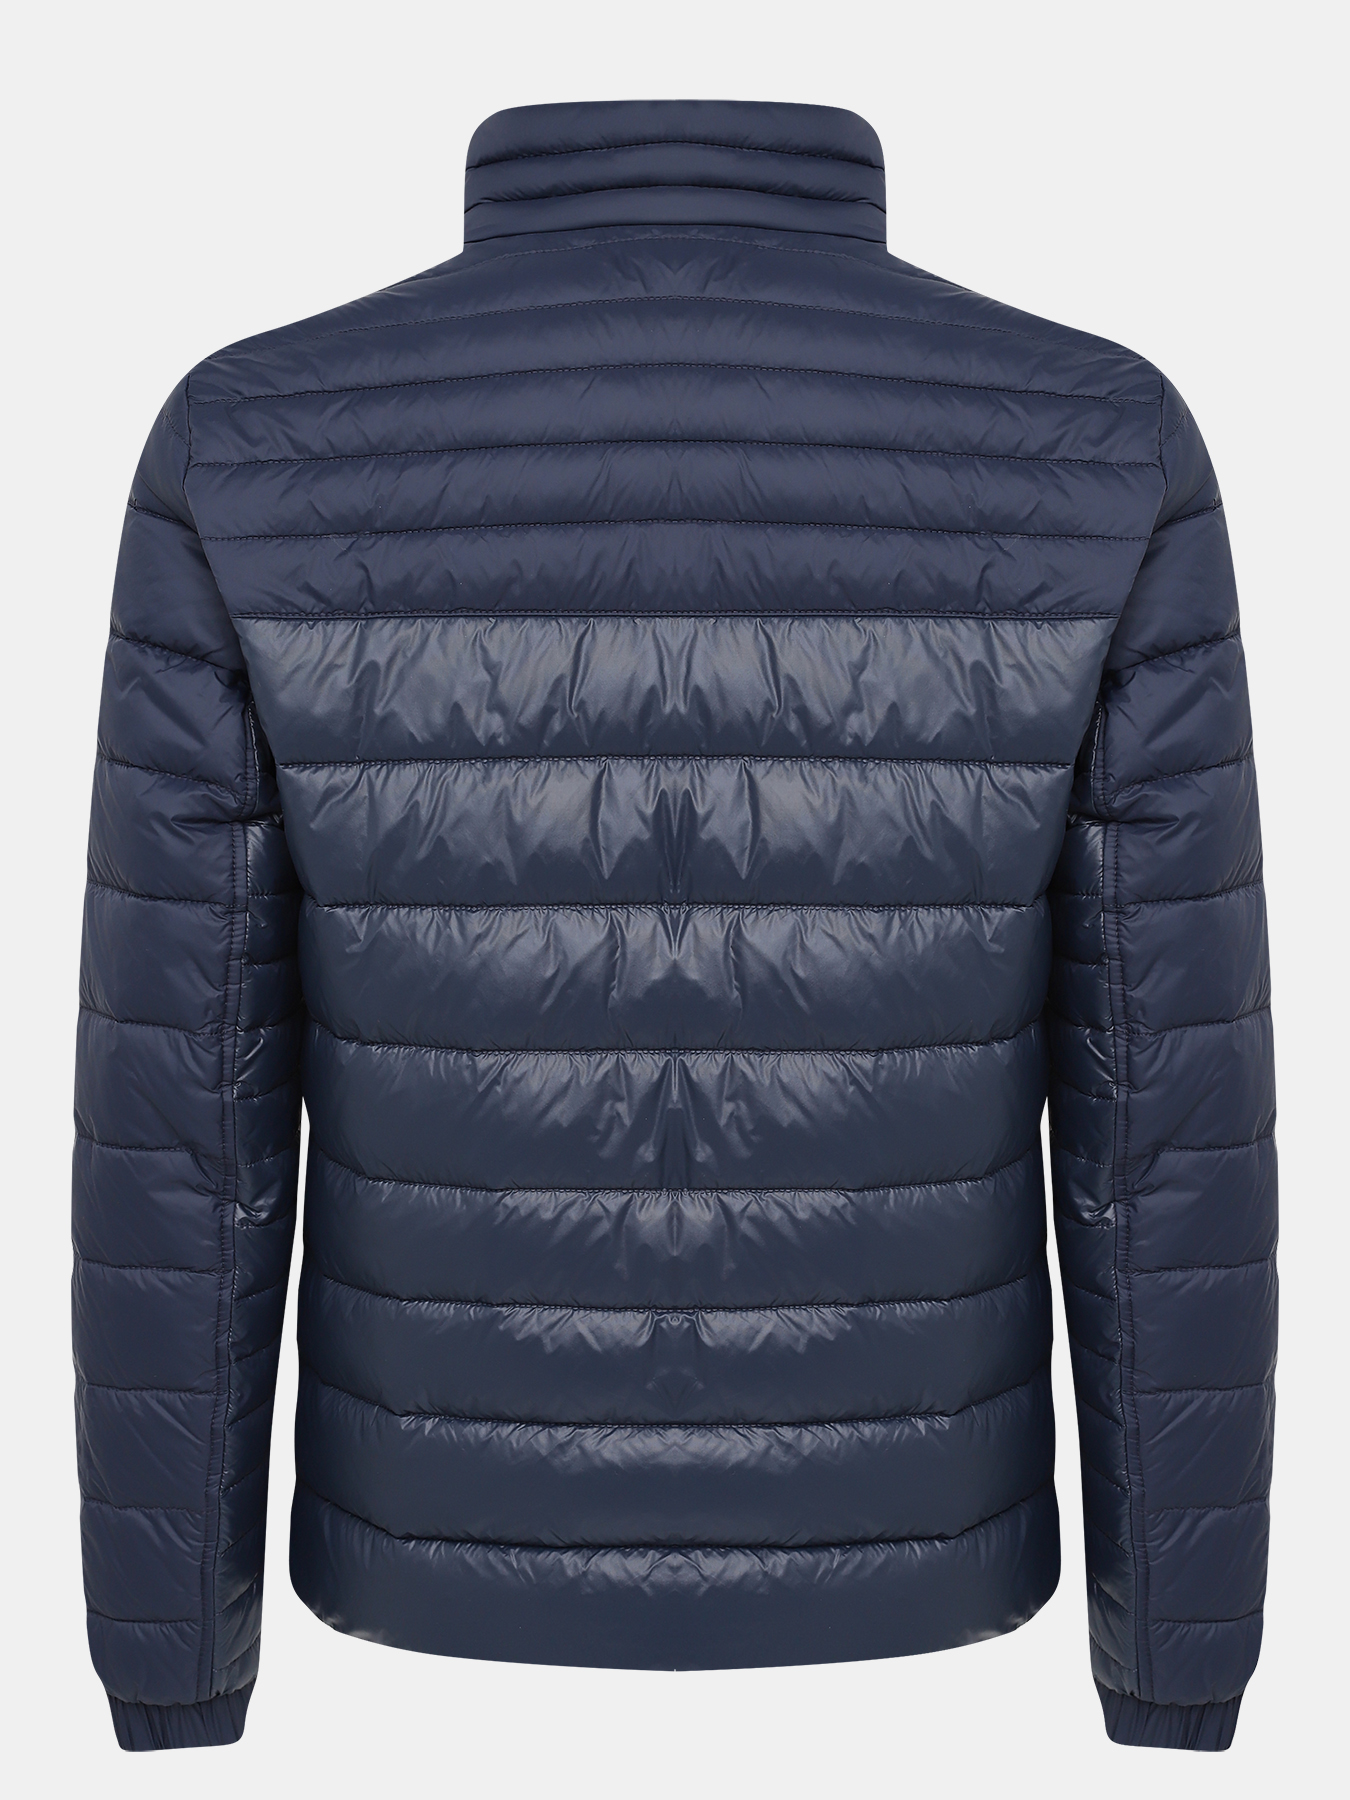 Куртка Oden BOSS 434079-025, цвет темно-синий, размер 48 - фото 5